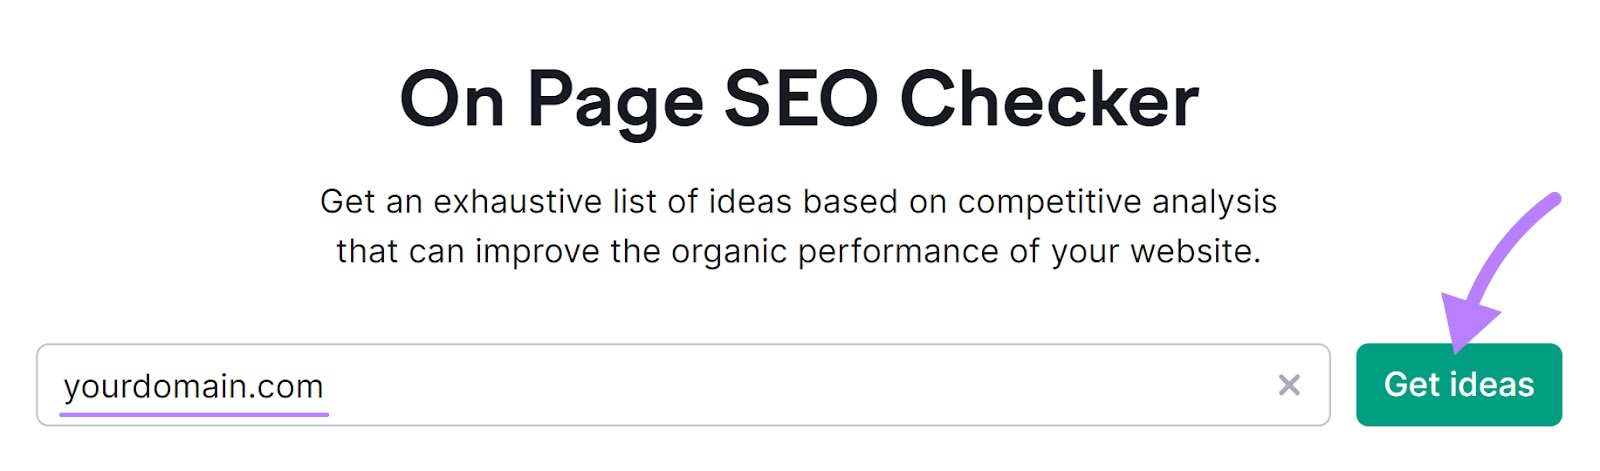 "Get ideas" fastener  successful  On Page SEO Checker